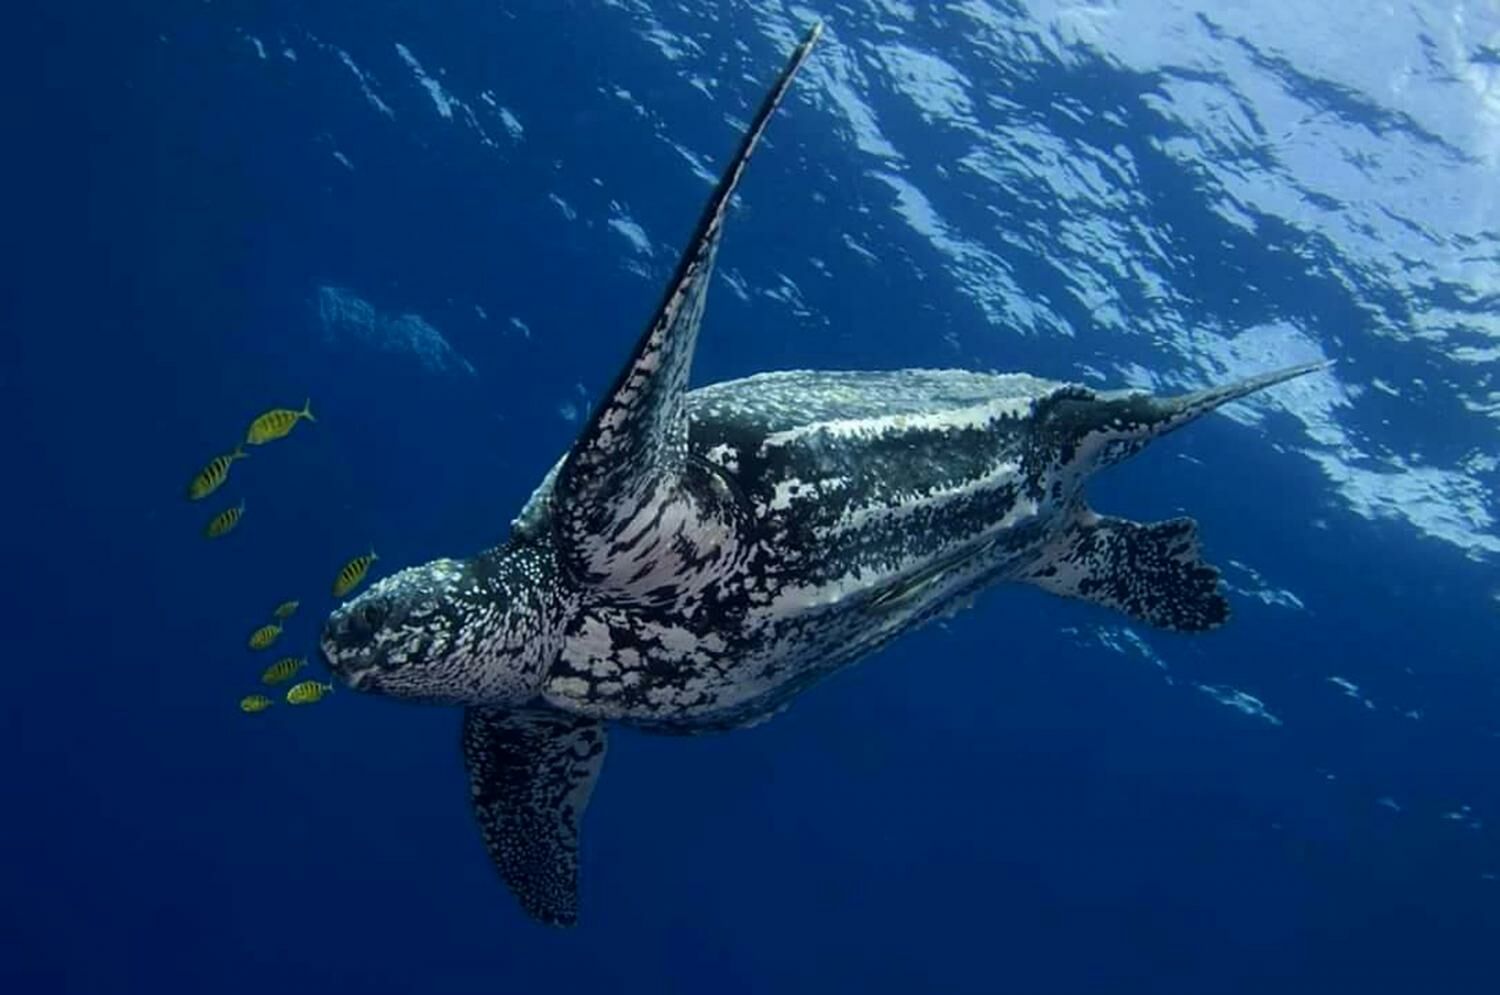 Leatherback sea turtle death sparks concern among Thai wildlife officials